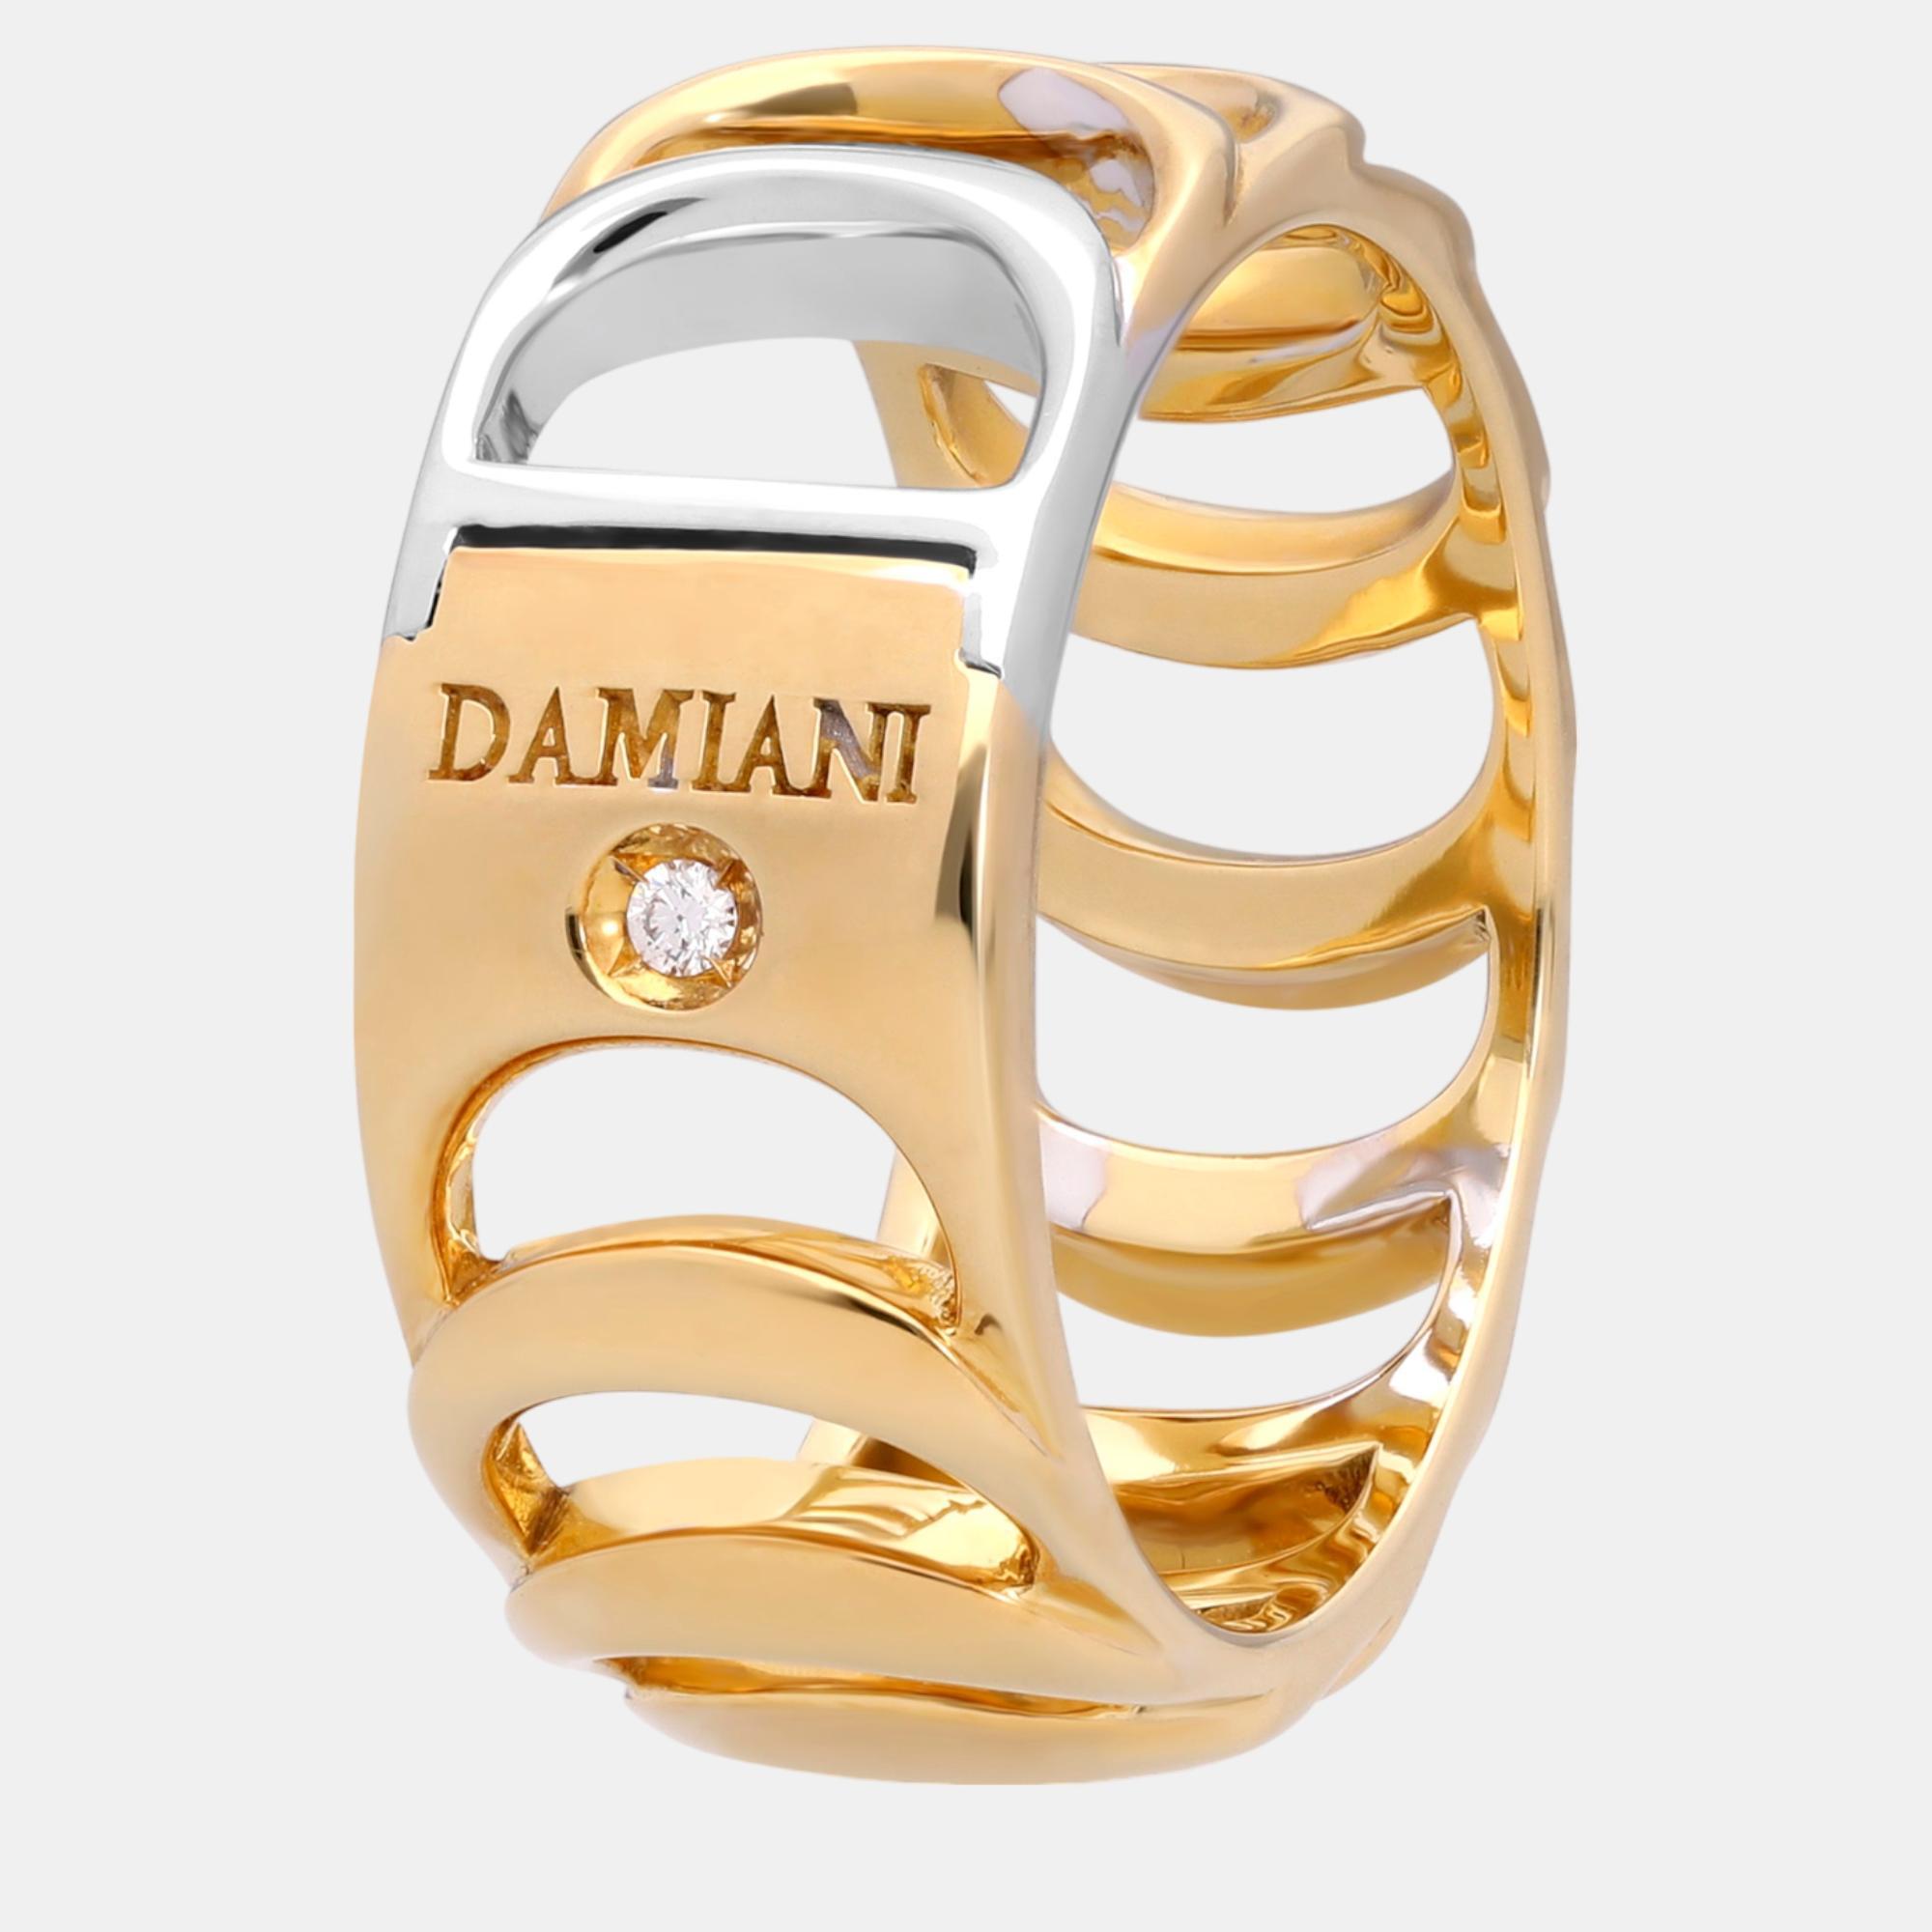 Damiani 18k yellow gold and 18k white gold, diamond band ring